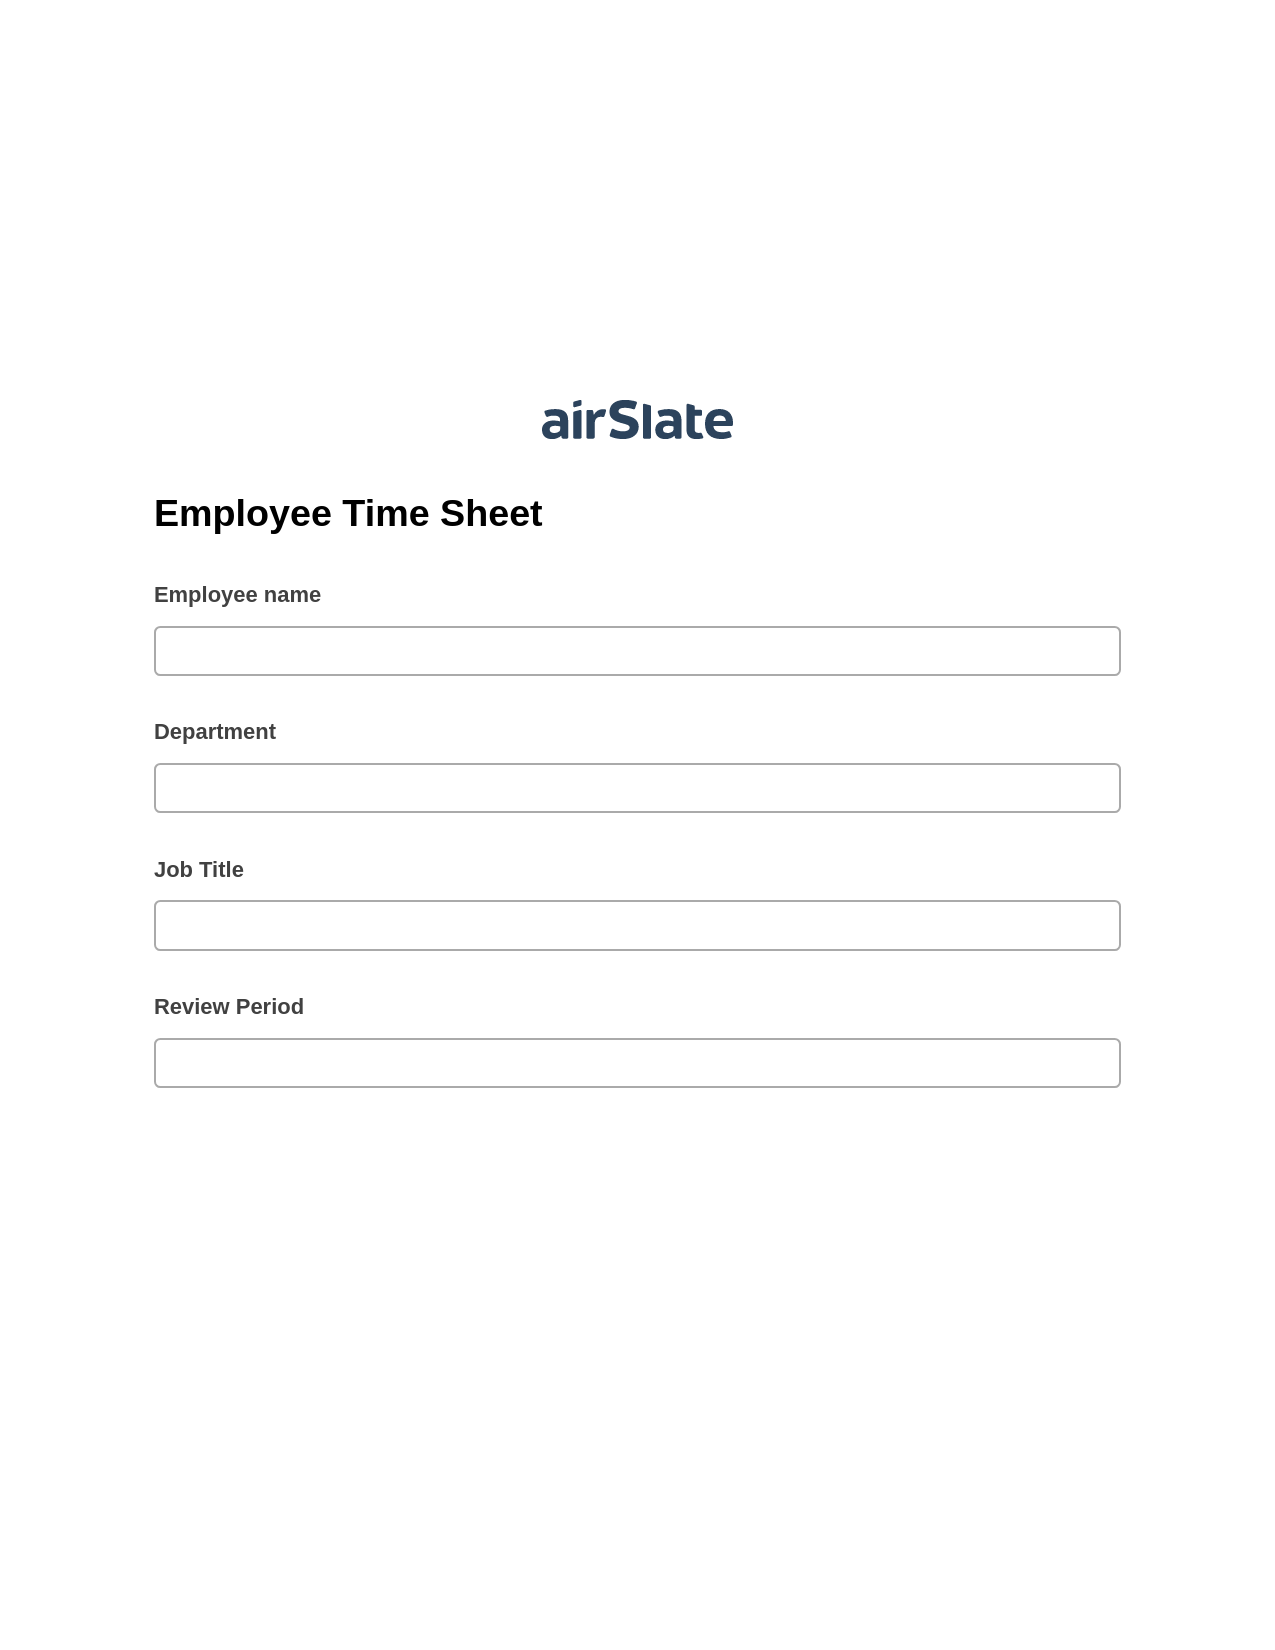 Employee Time Sheet Pre-fill from Salesforce Records Bot, Update Salesforce Records Bot, Archive to Box Bot